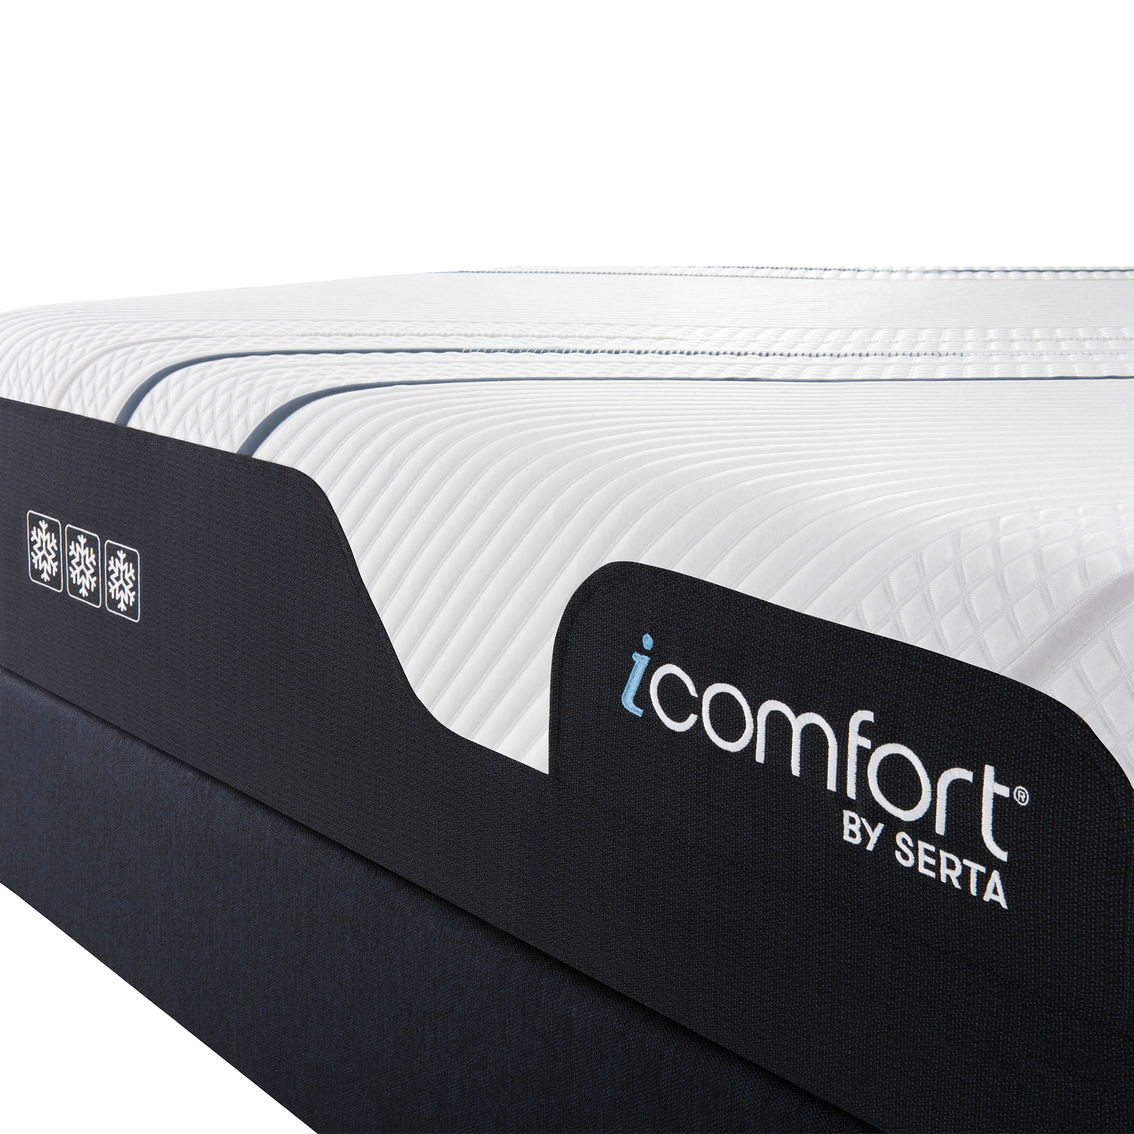 Serta iComfort CF3000 Memory Foam Medium Mattress - Image 4 of 5